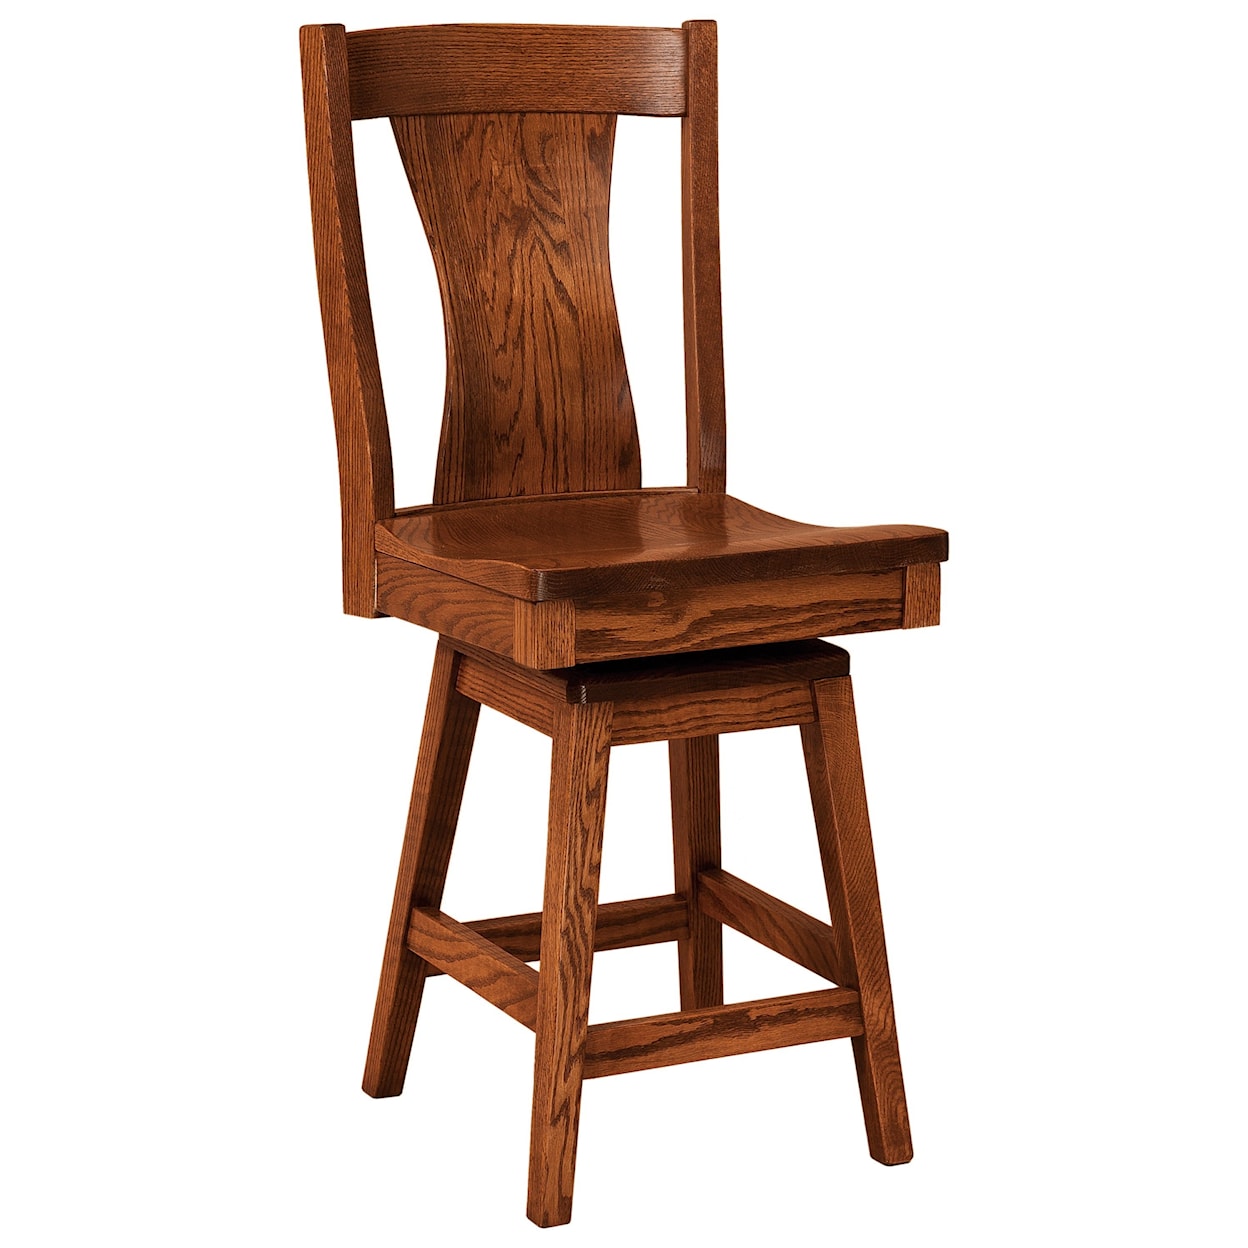 F&N Woodworking Westin Swivel Bar Height Stool - Leather Seat